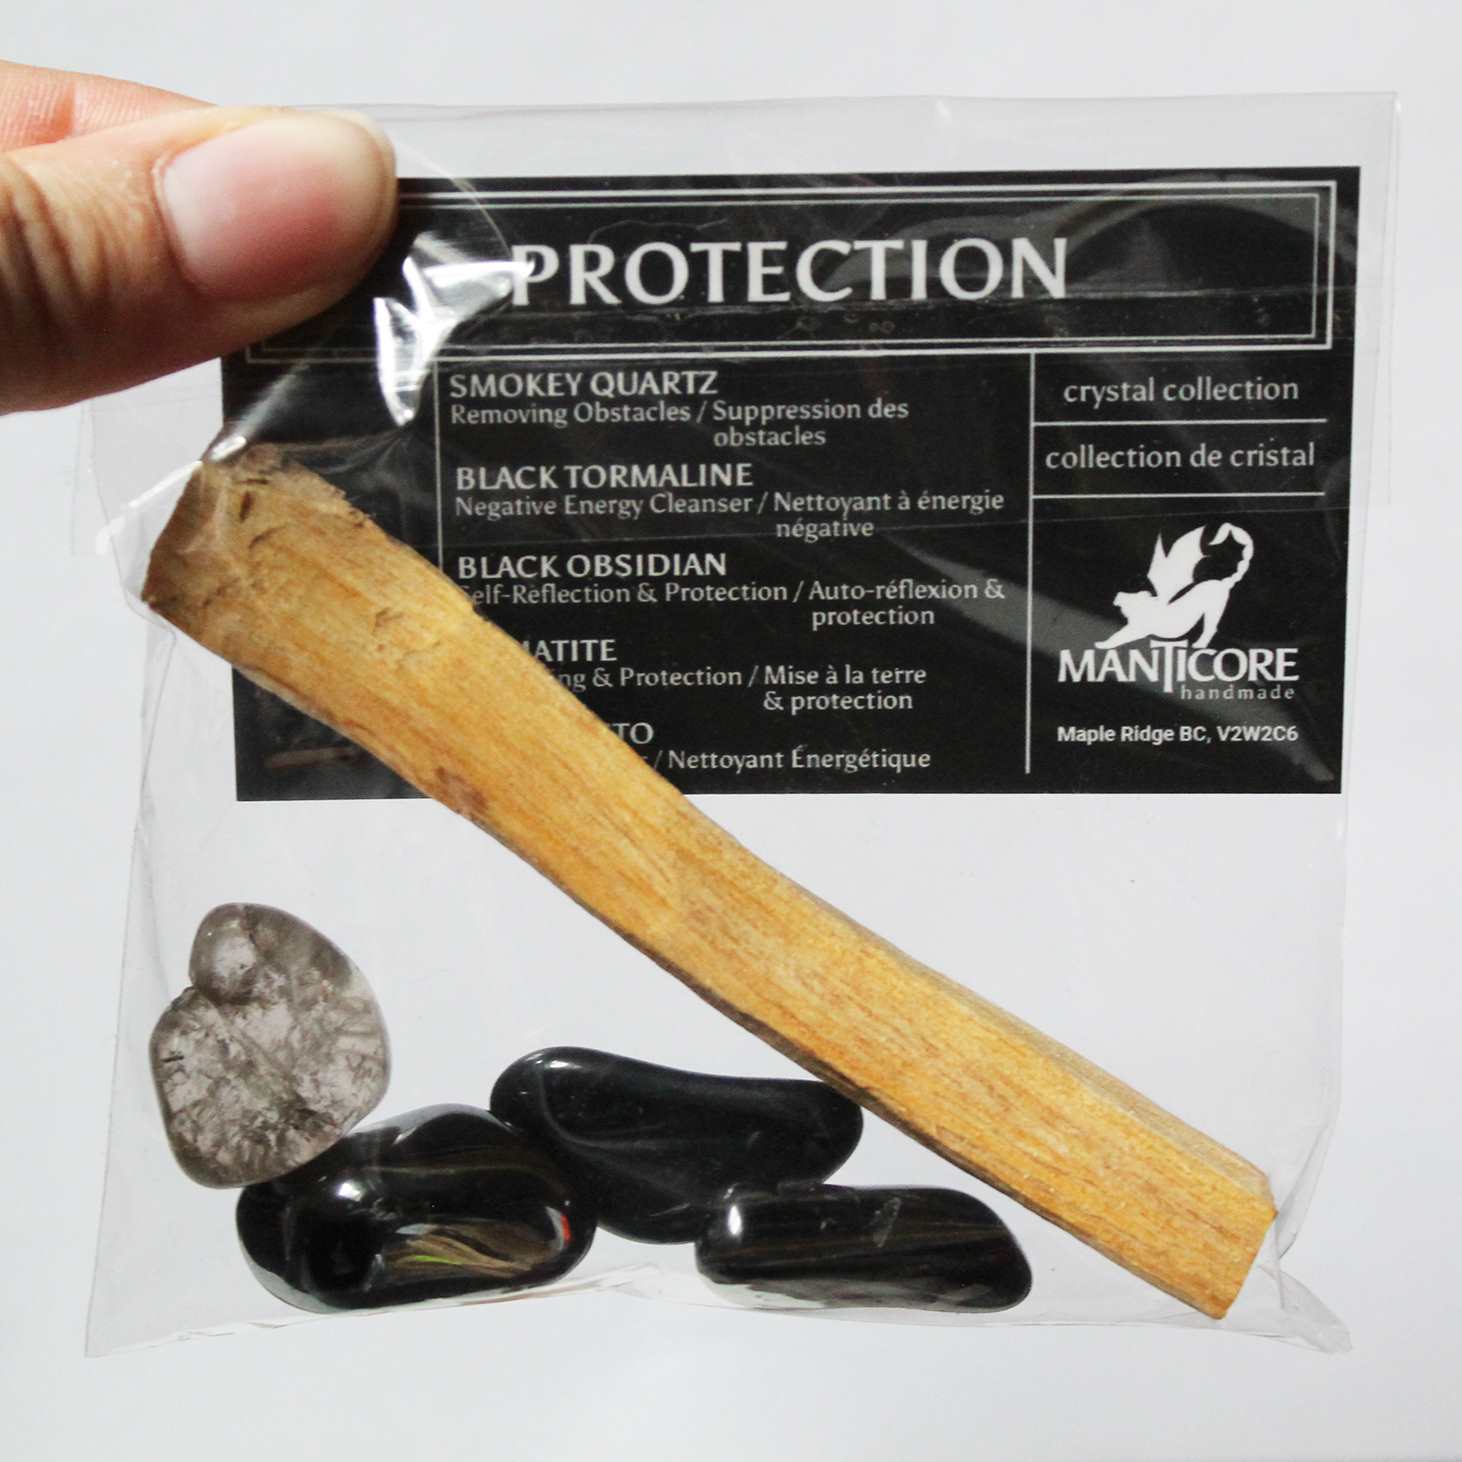 Protection Crystal Kit